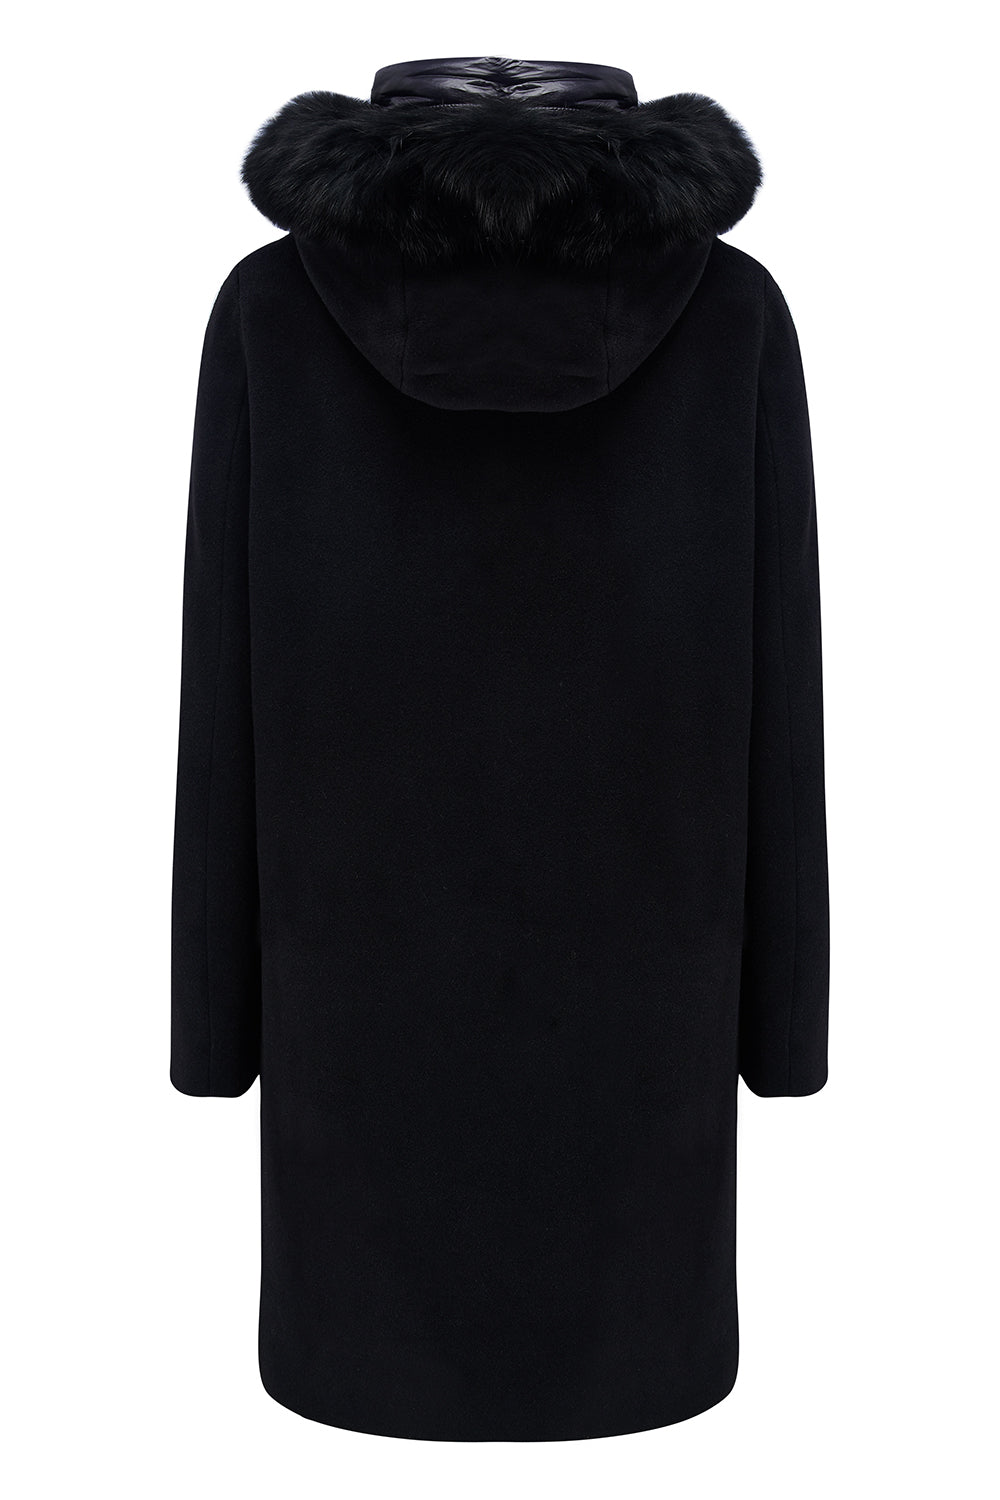 Herno Women’s Alpaca Wool Coat Black - Back View